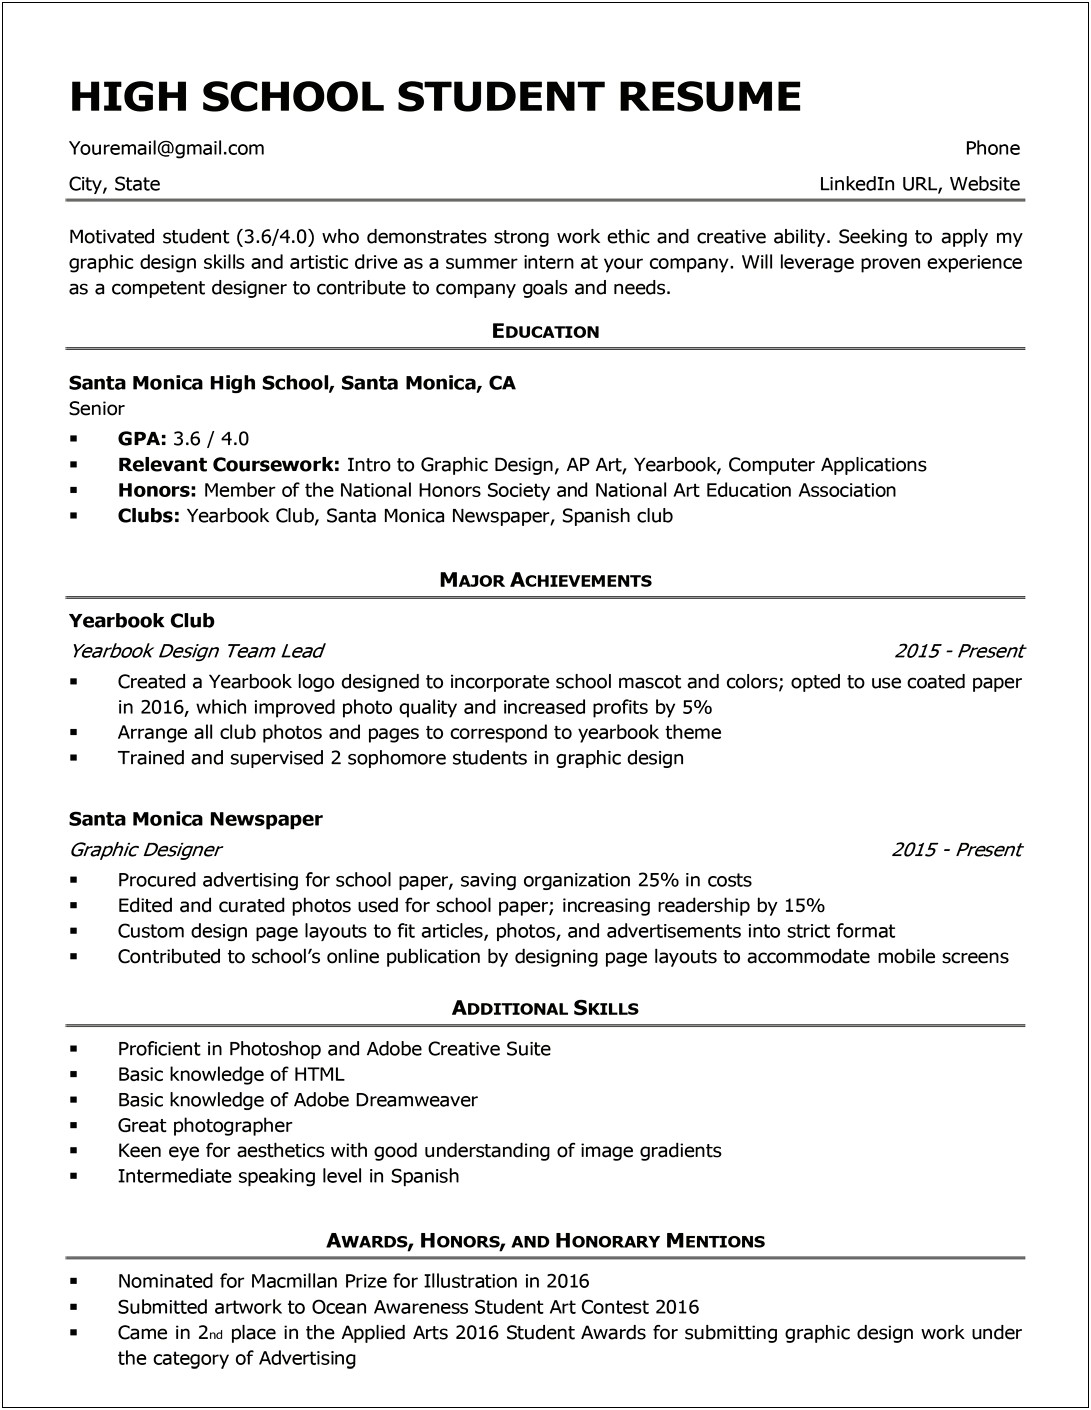 Resume Skills And Accomplishment Examples